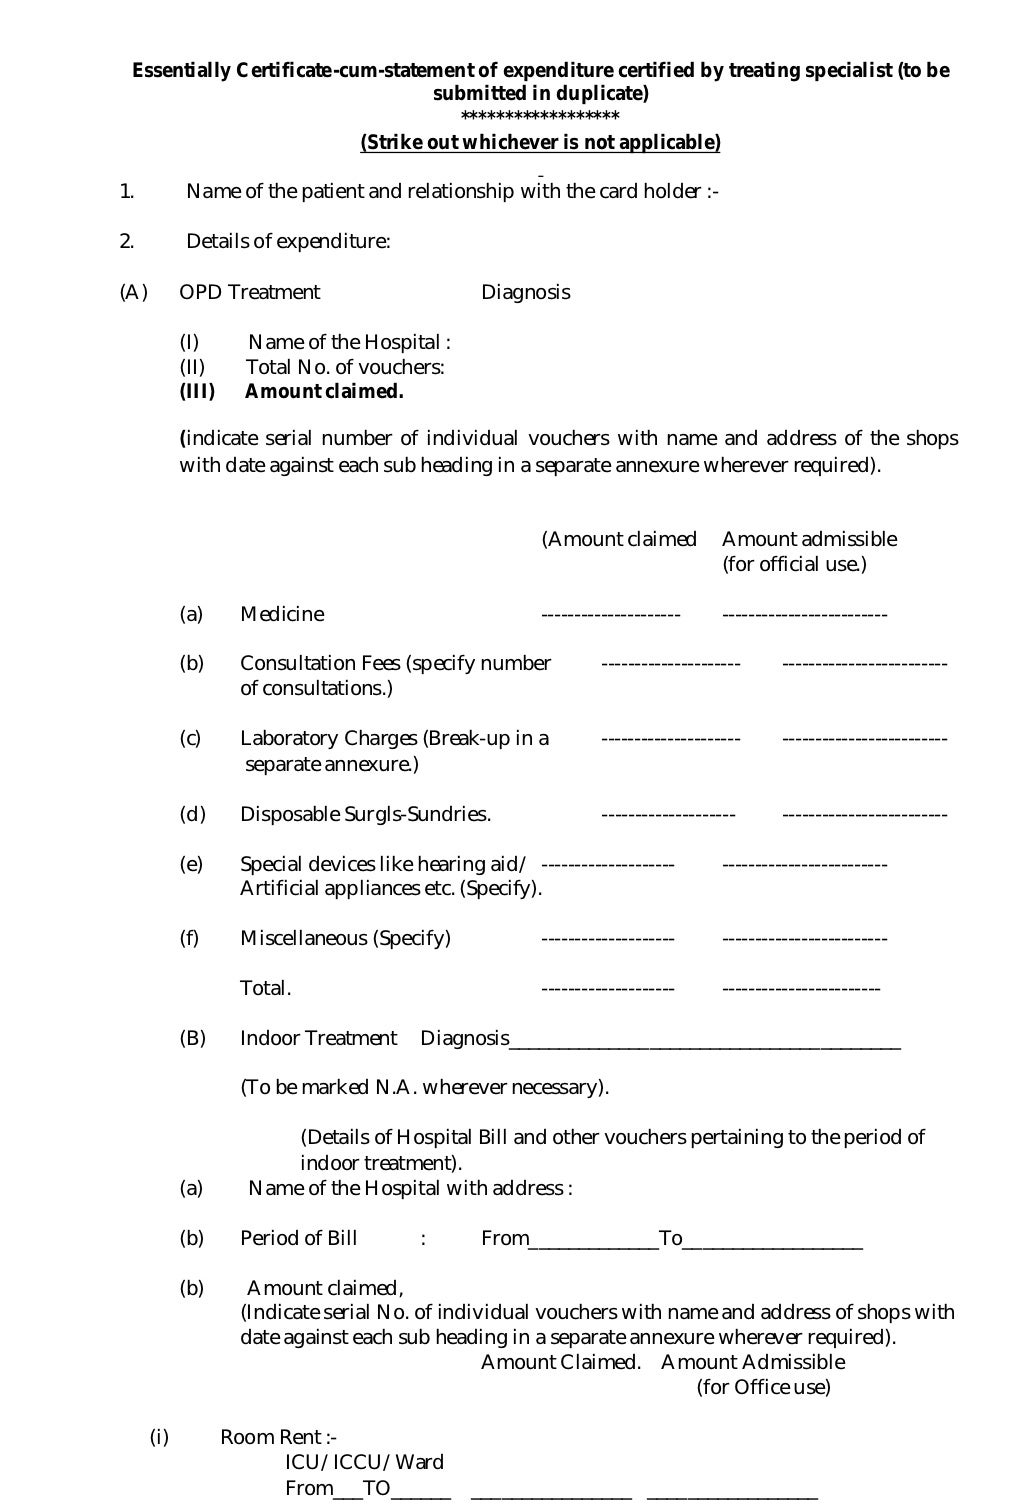 cghs-reimbursement-forms